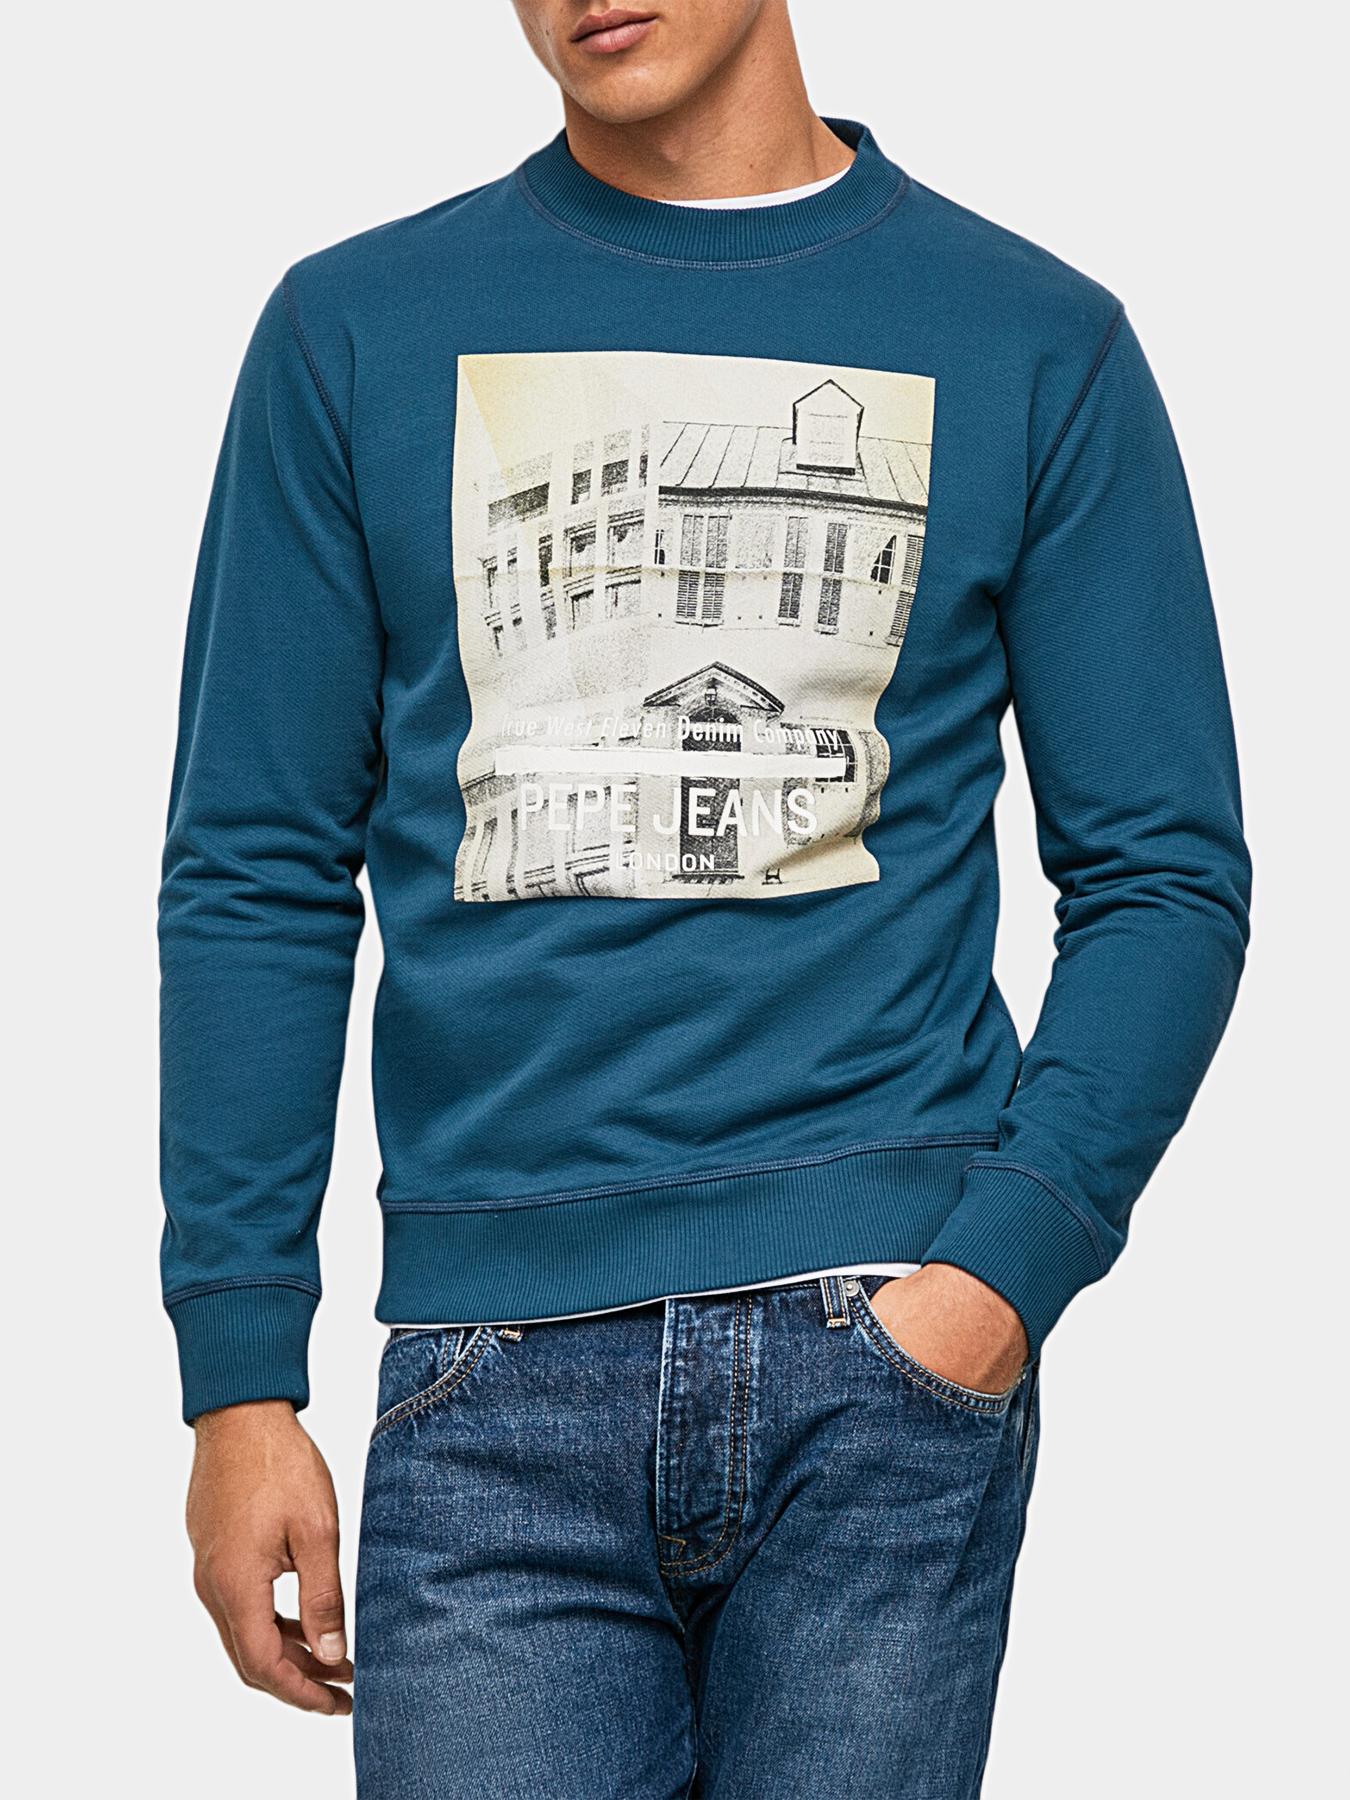 PERCIVAL blue sweatshirt with photo — Jeans print Pepe brand